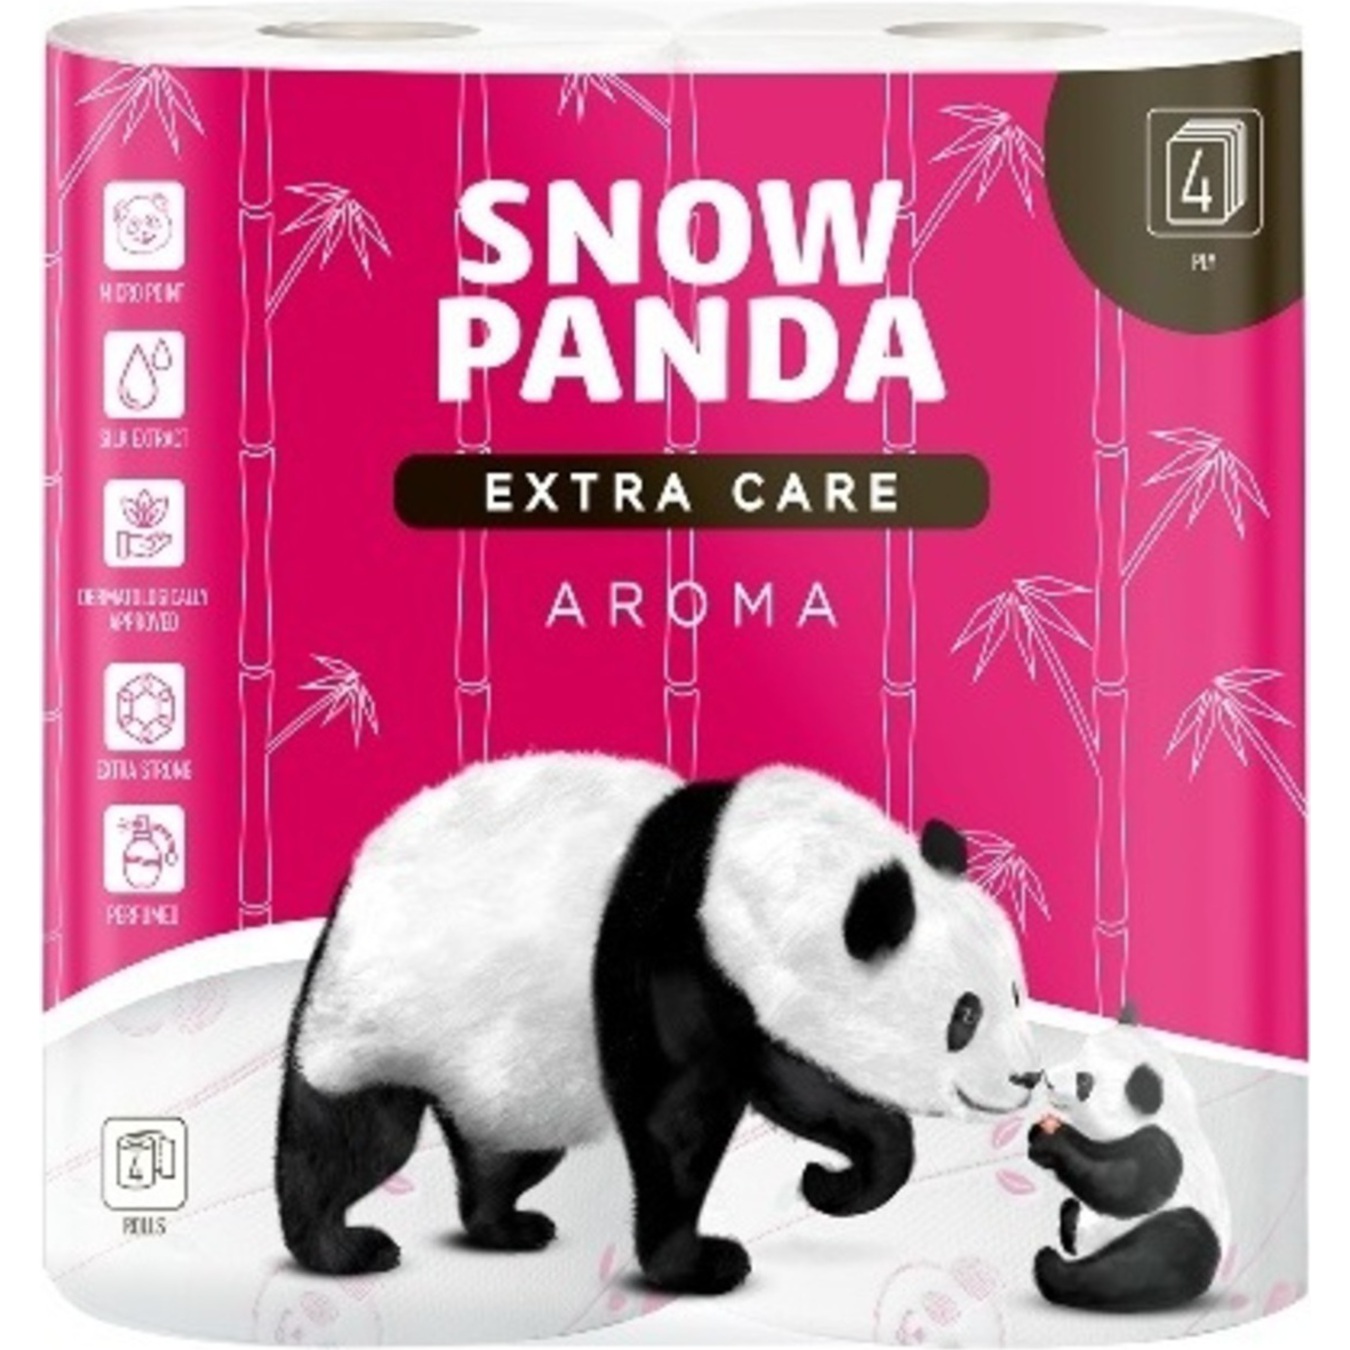 Snow Panda Extra Care Aroma 4 layers Toilet Paper 4pcs